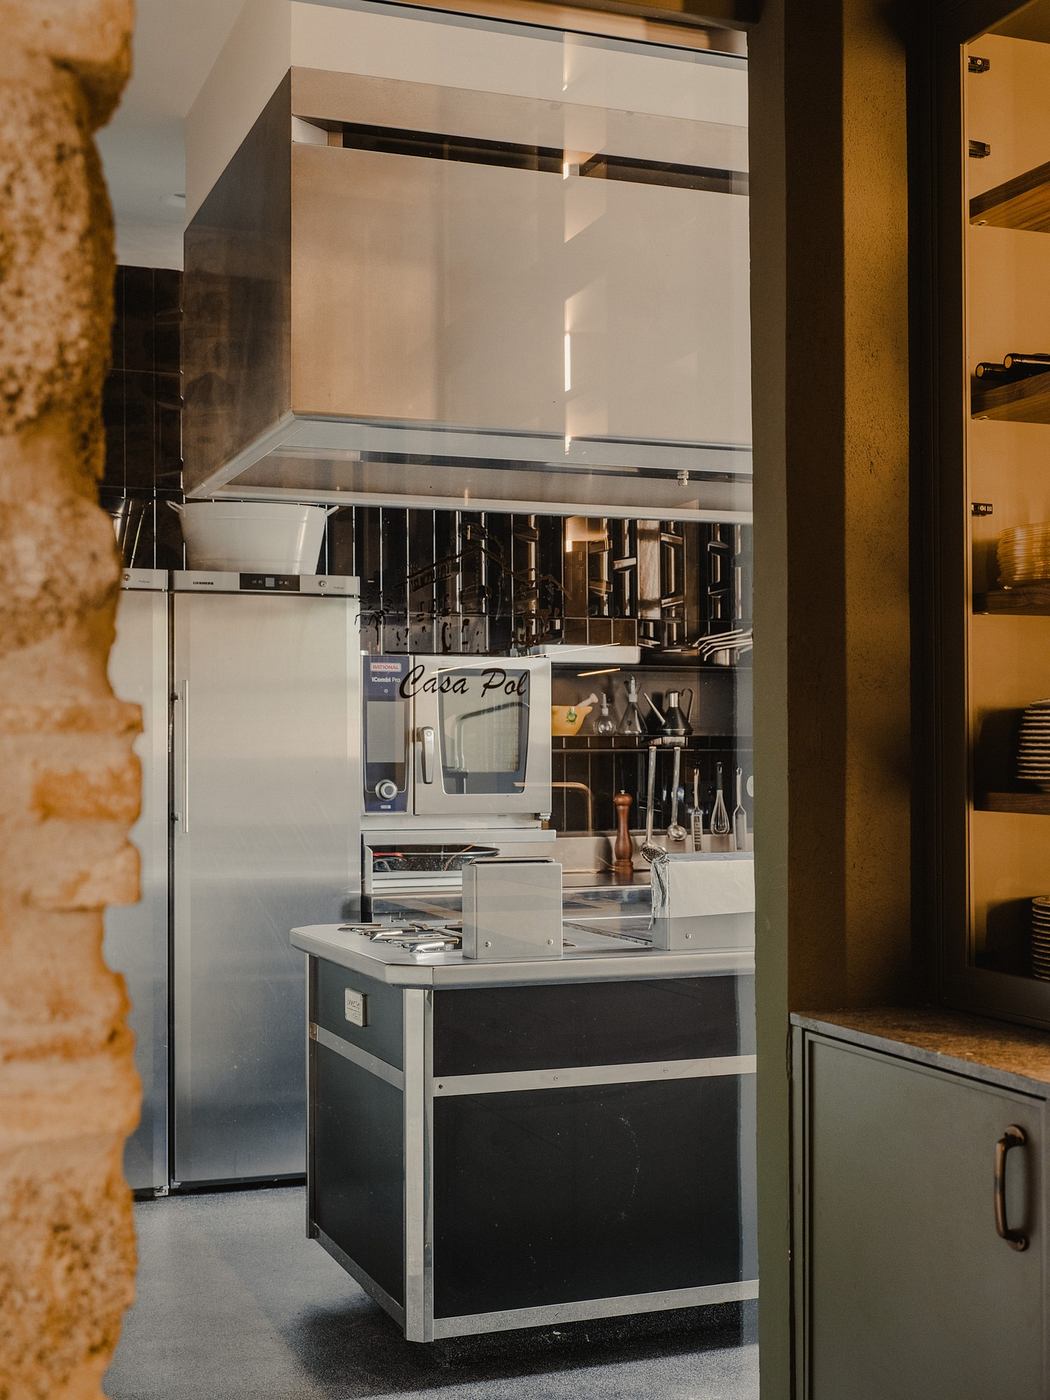 Modern kitchen interior with stainless steel appliances and minimalist design.